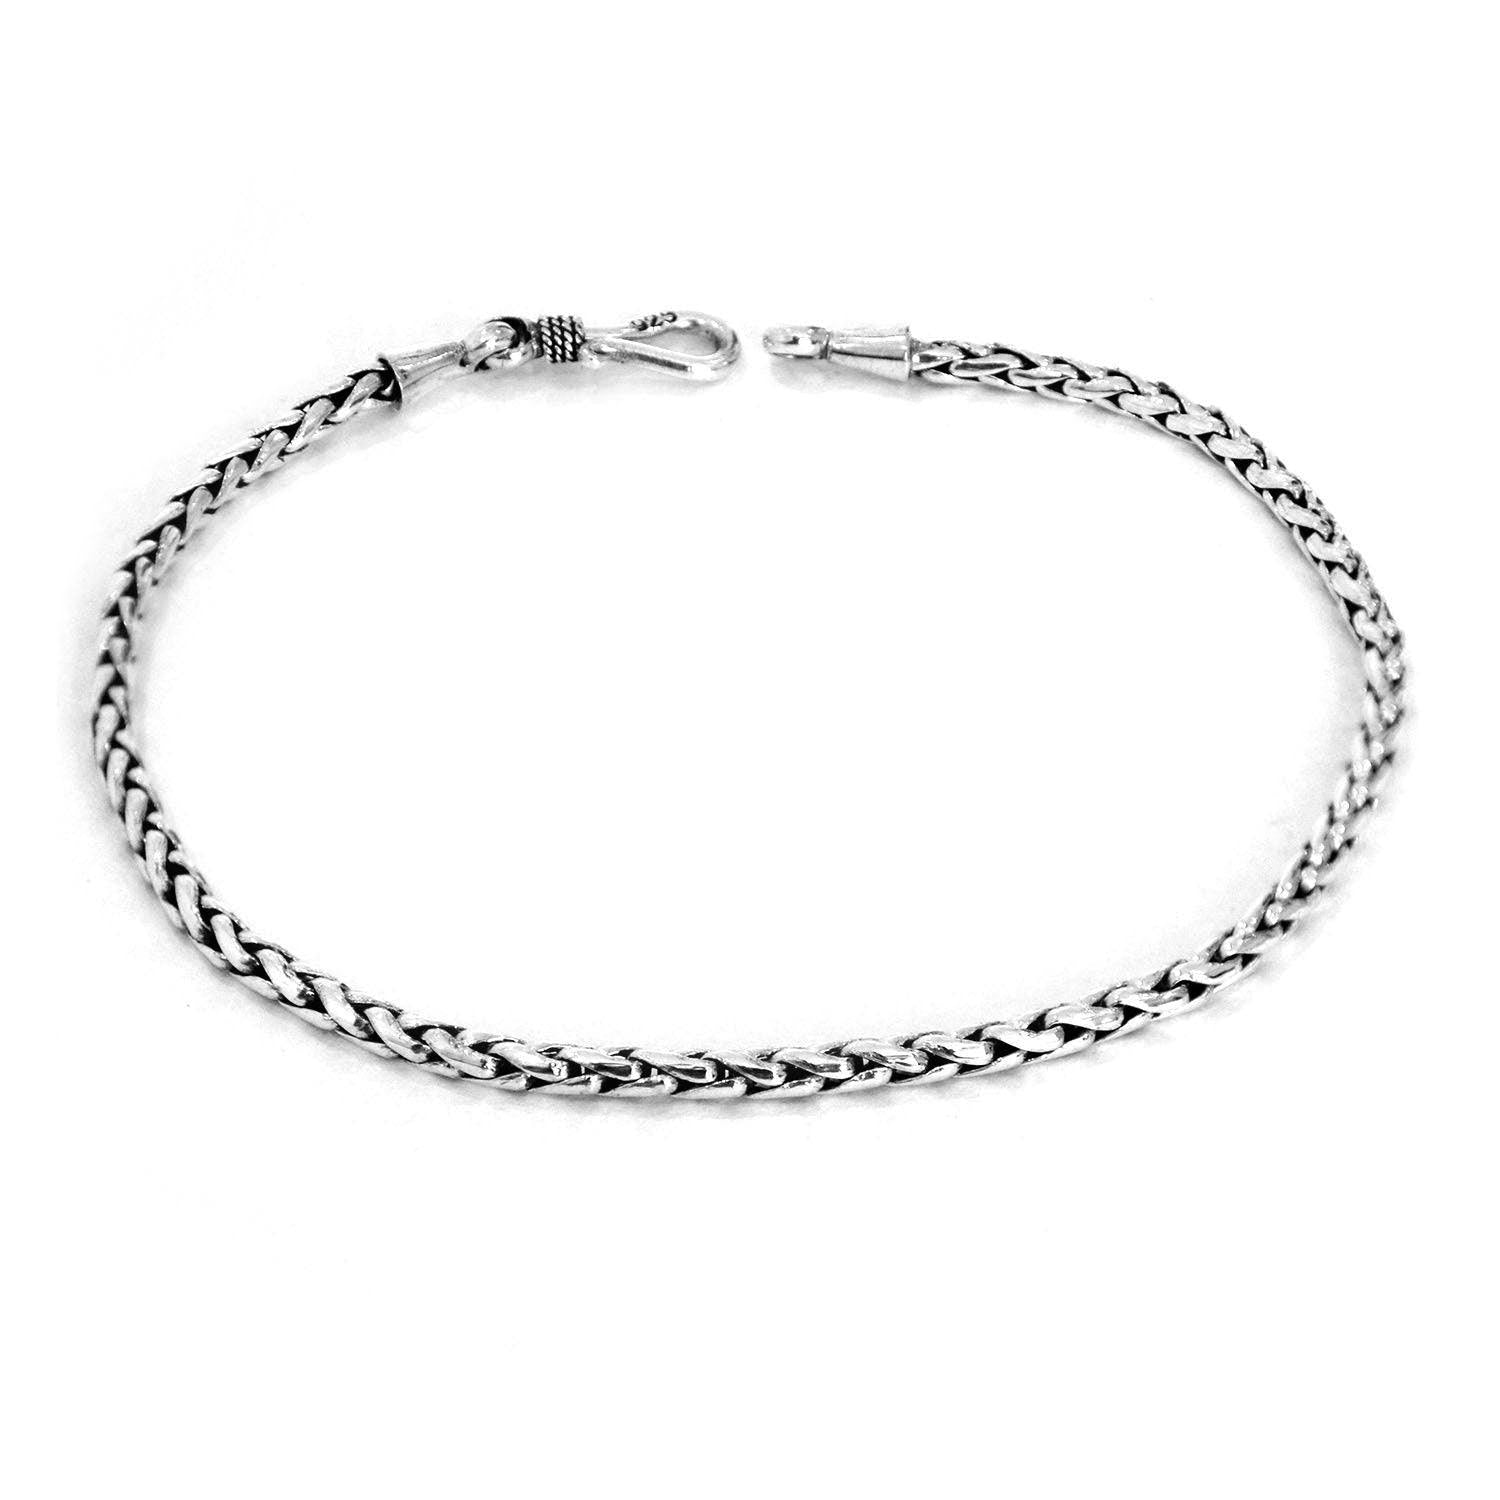 Bali Solid WHEAT Chain Bracelet in 925 Sterling Silver Handmade - 2.5 mm